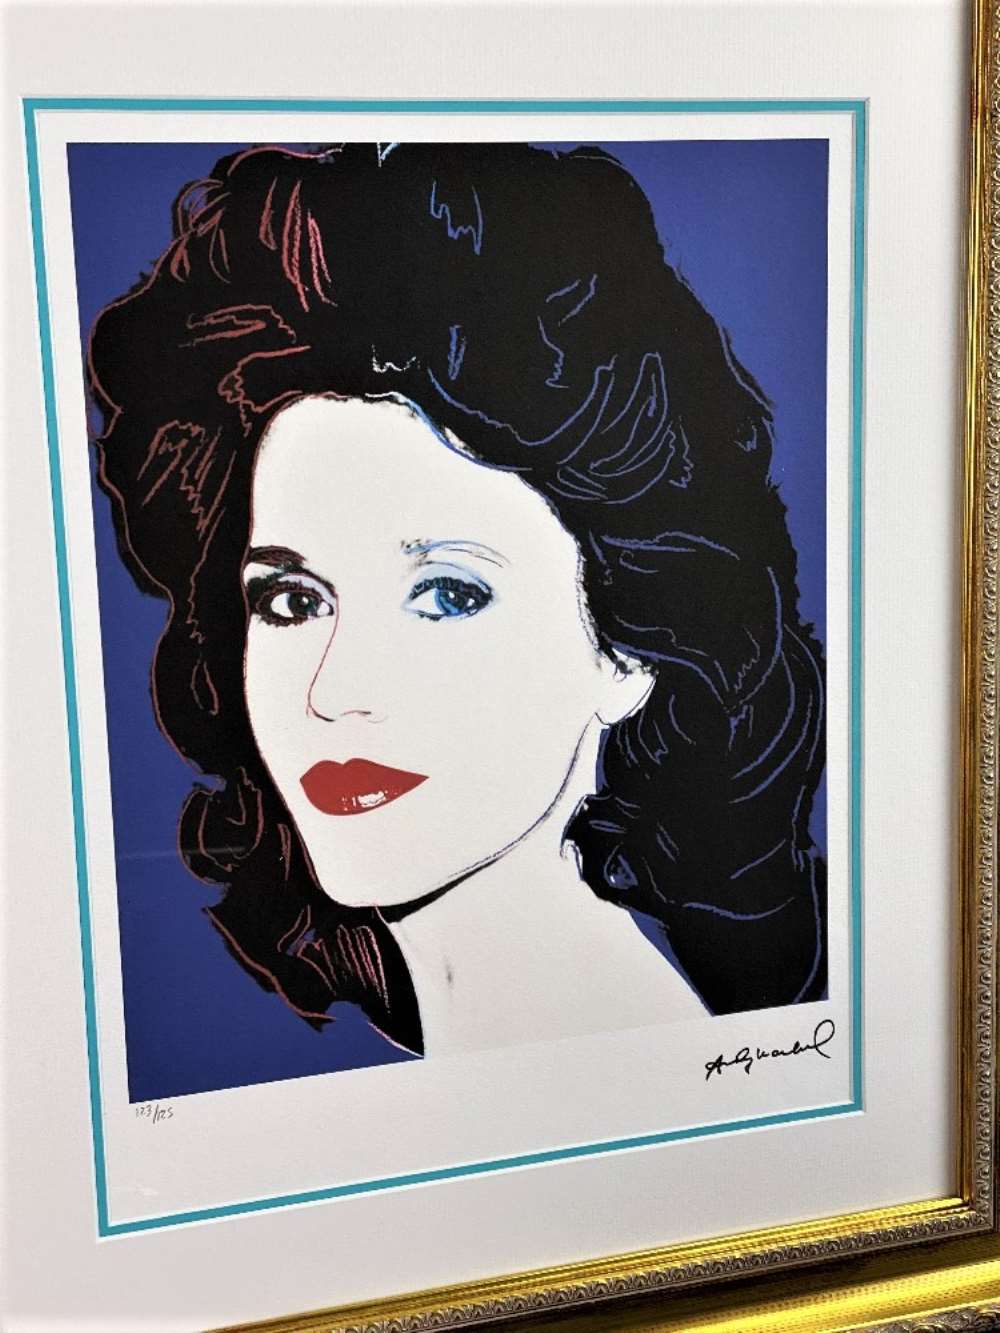 SOLD VIA BUY IT NOW -PLEASE DO NOT BID- Andy Warhol (1928-1987) Jane Fonda Ltd Edition Lithograph - Image 3 of 7